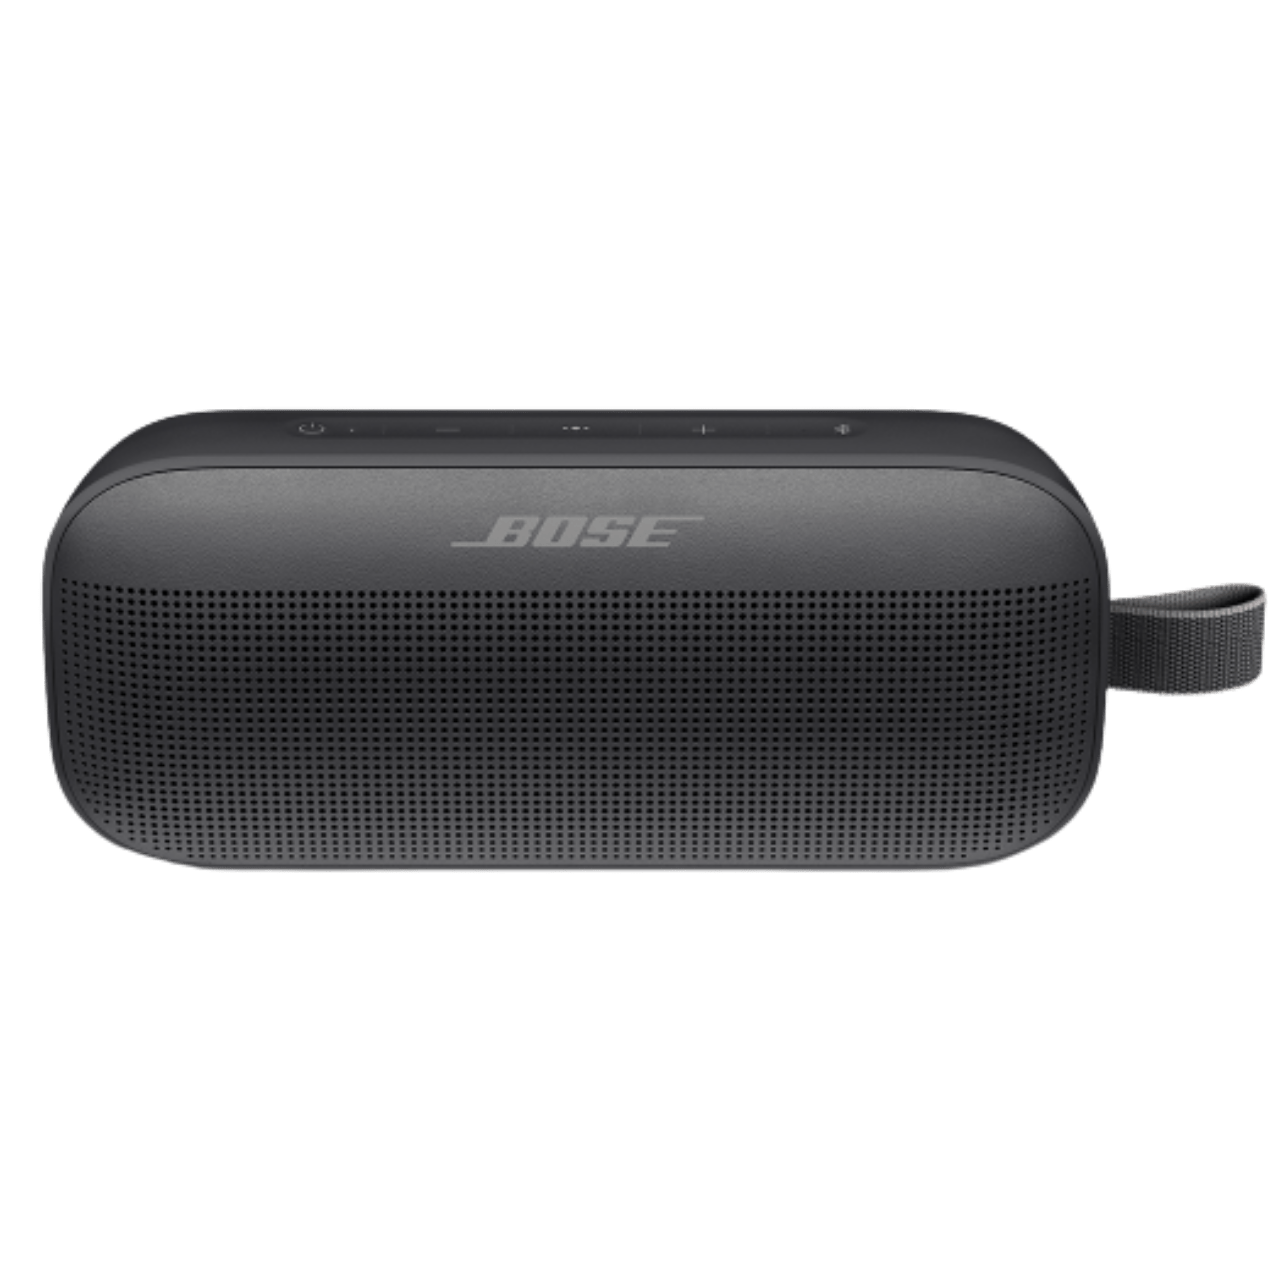 Ideal Enceinte Bluetooth Portable Neuve Ideal Cadeau Puissante Waterproof Jbl Micro 